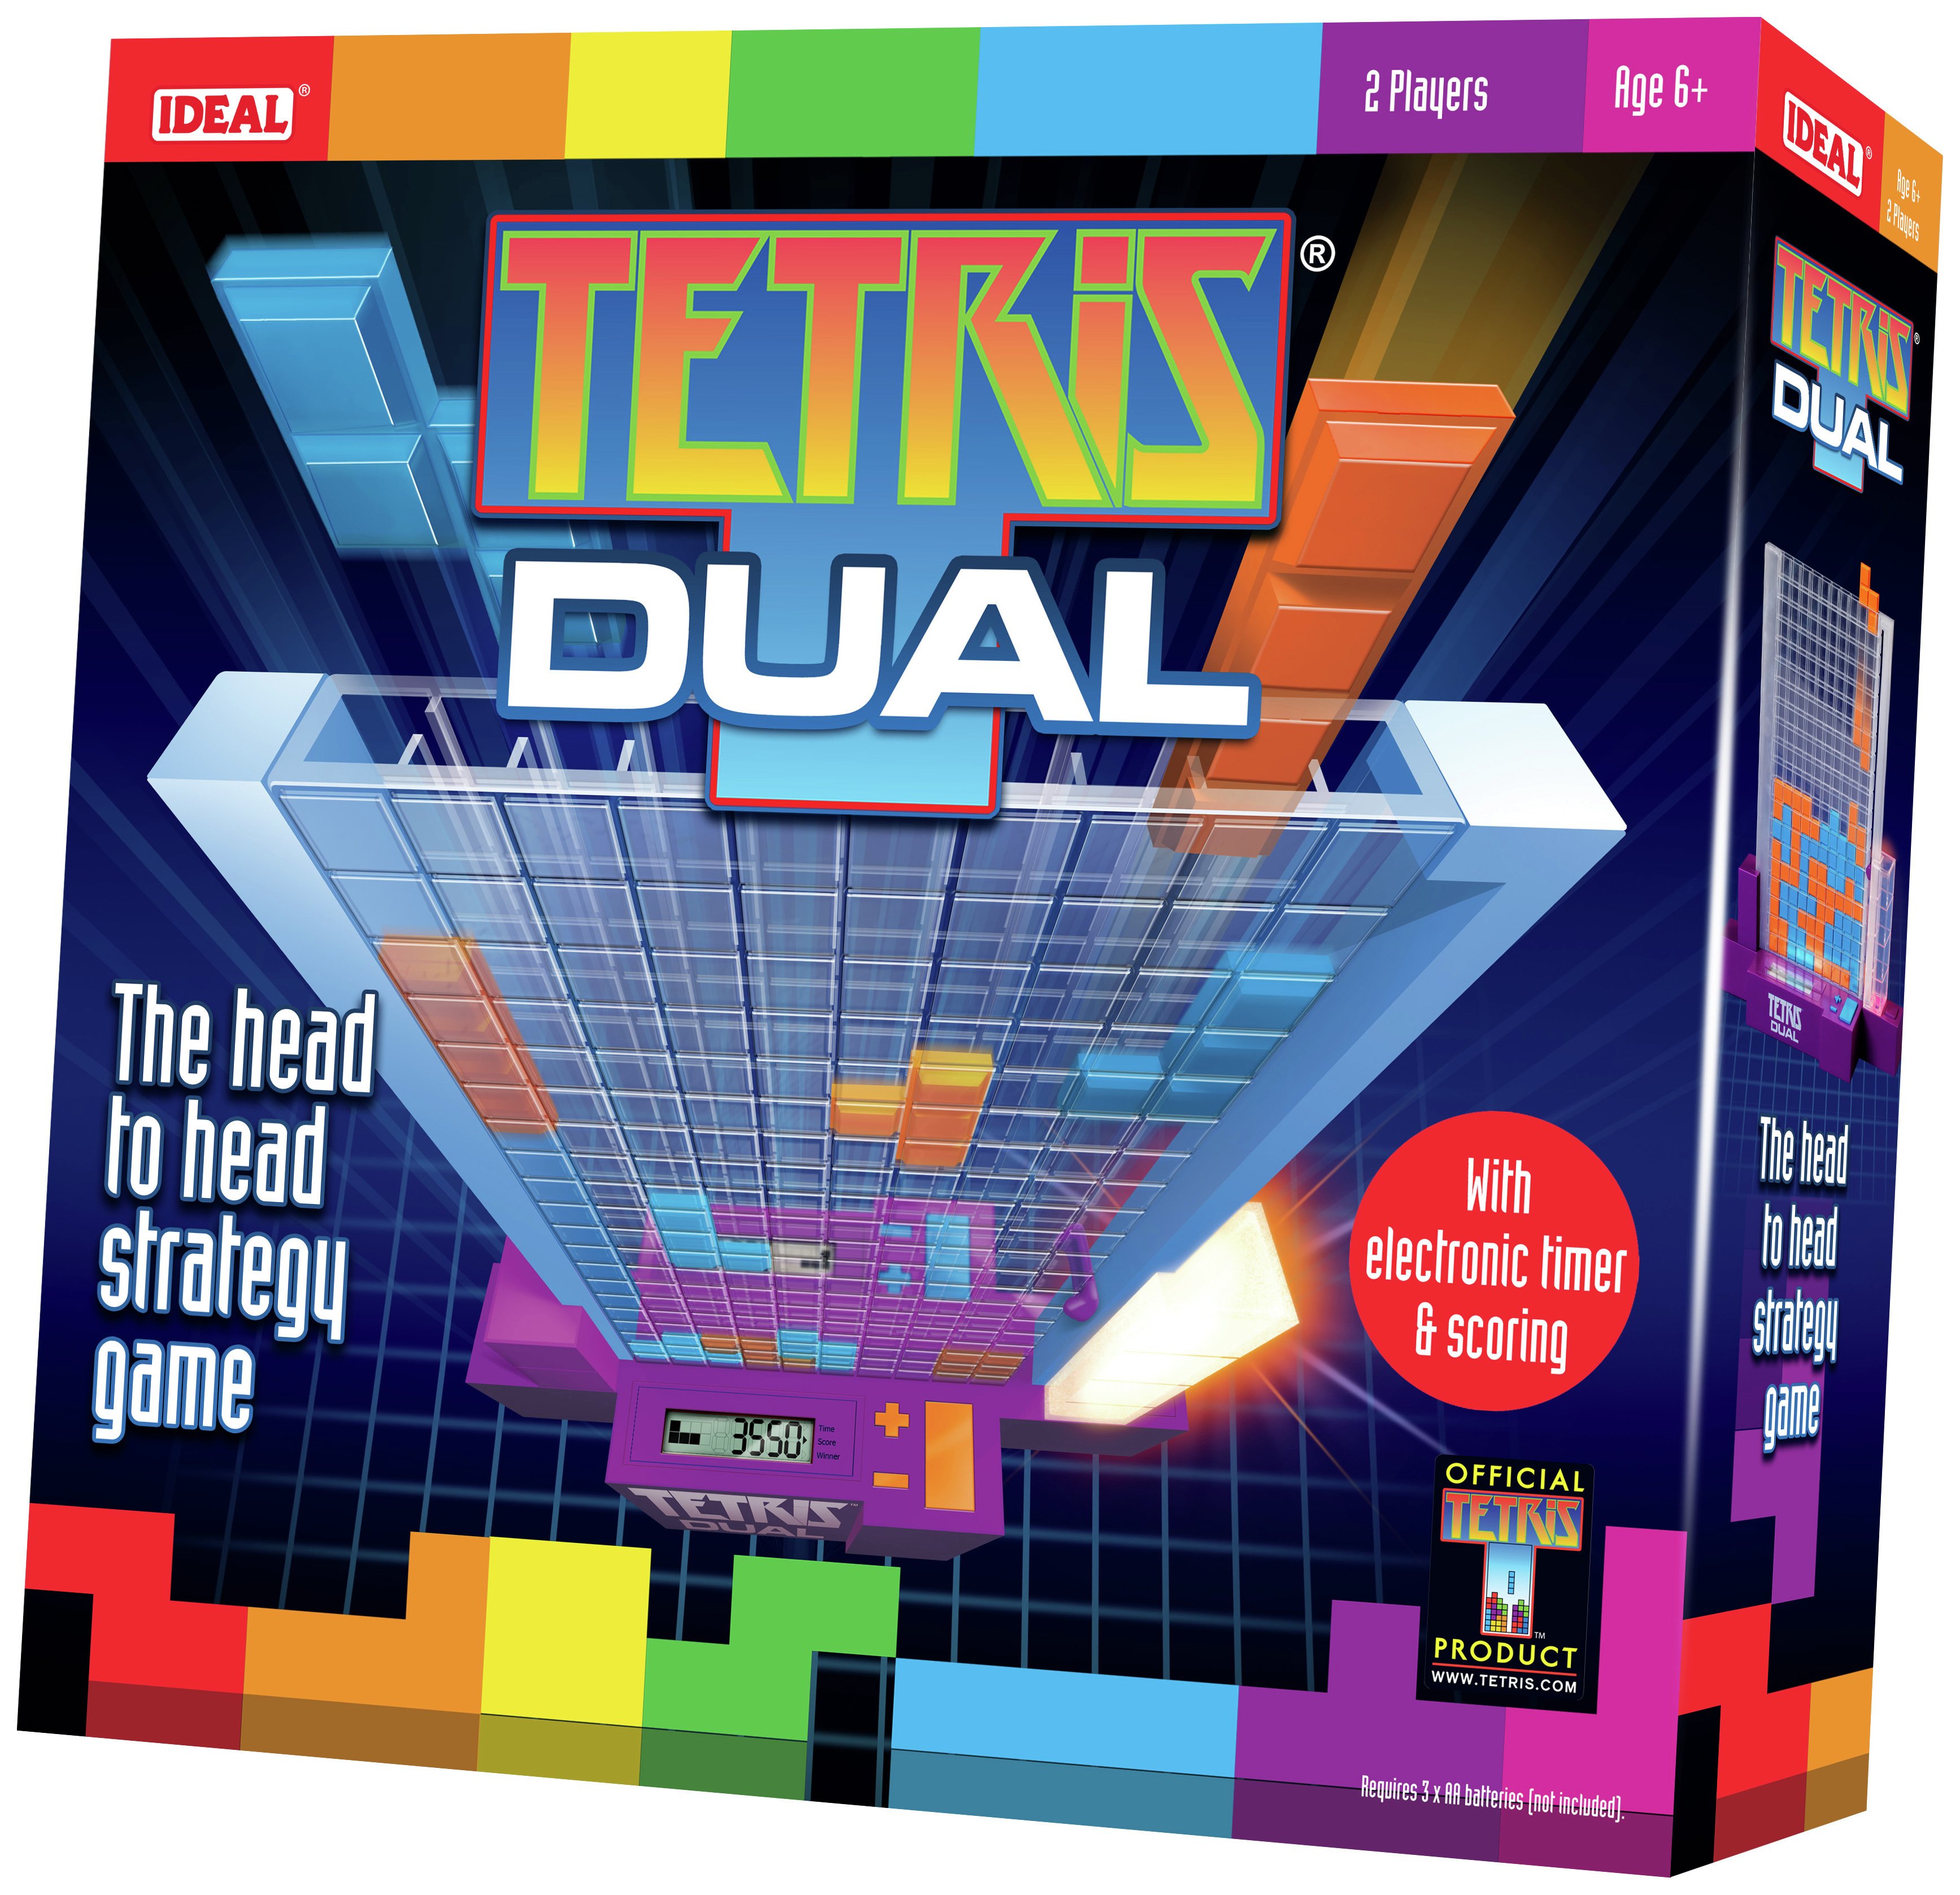 Tetris Dual Game Review